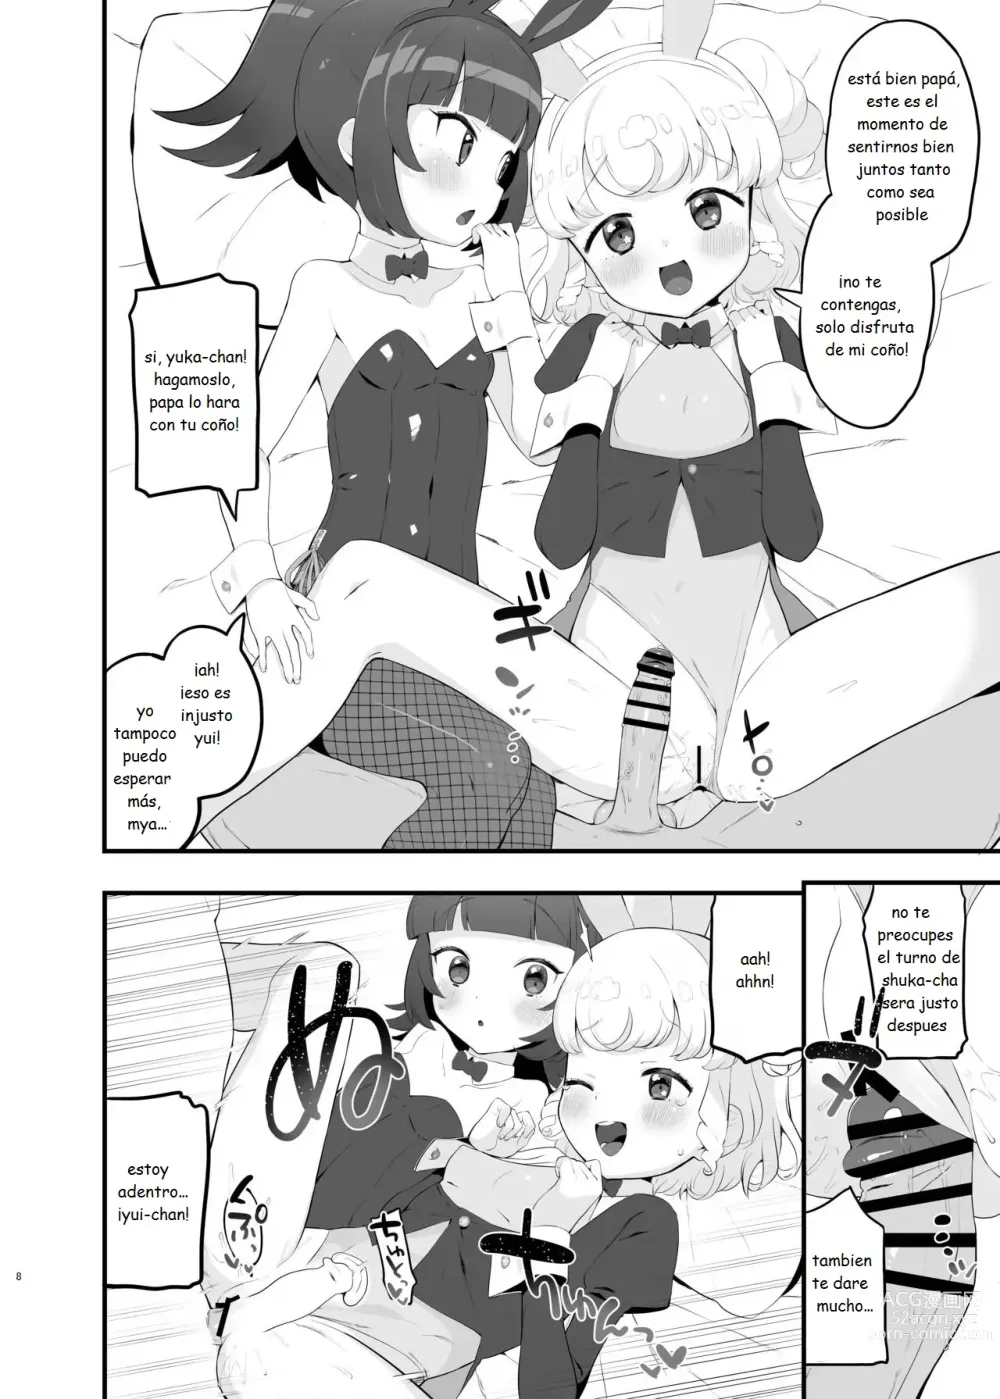 Page 7 of doujinshi Noche Dorada